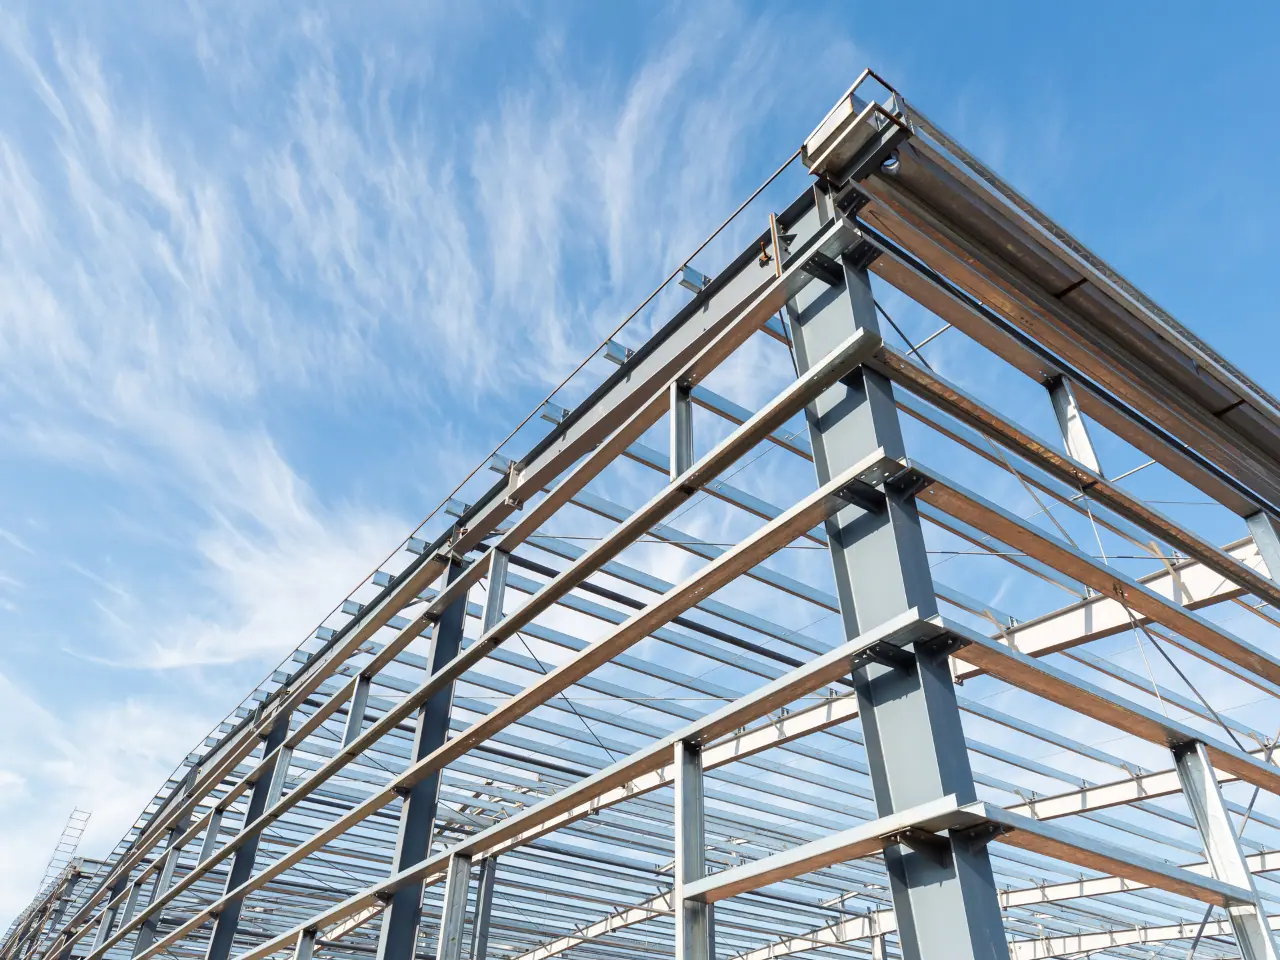 Steel frame for infrastructure building